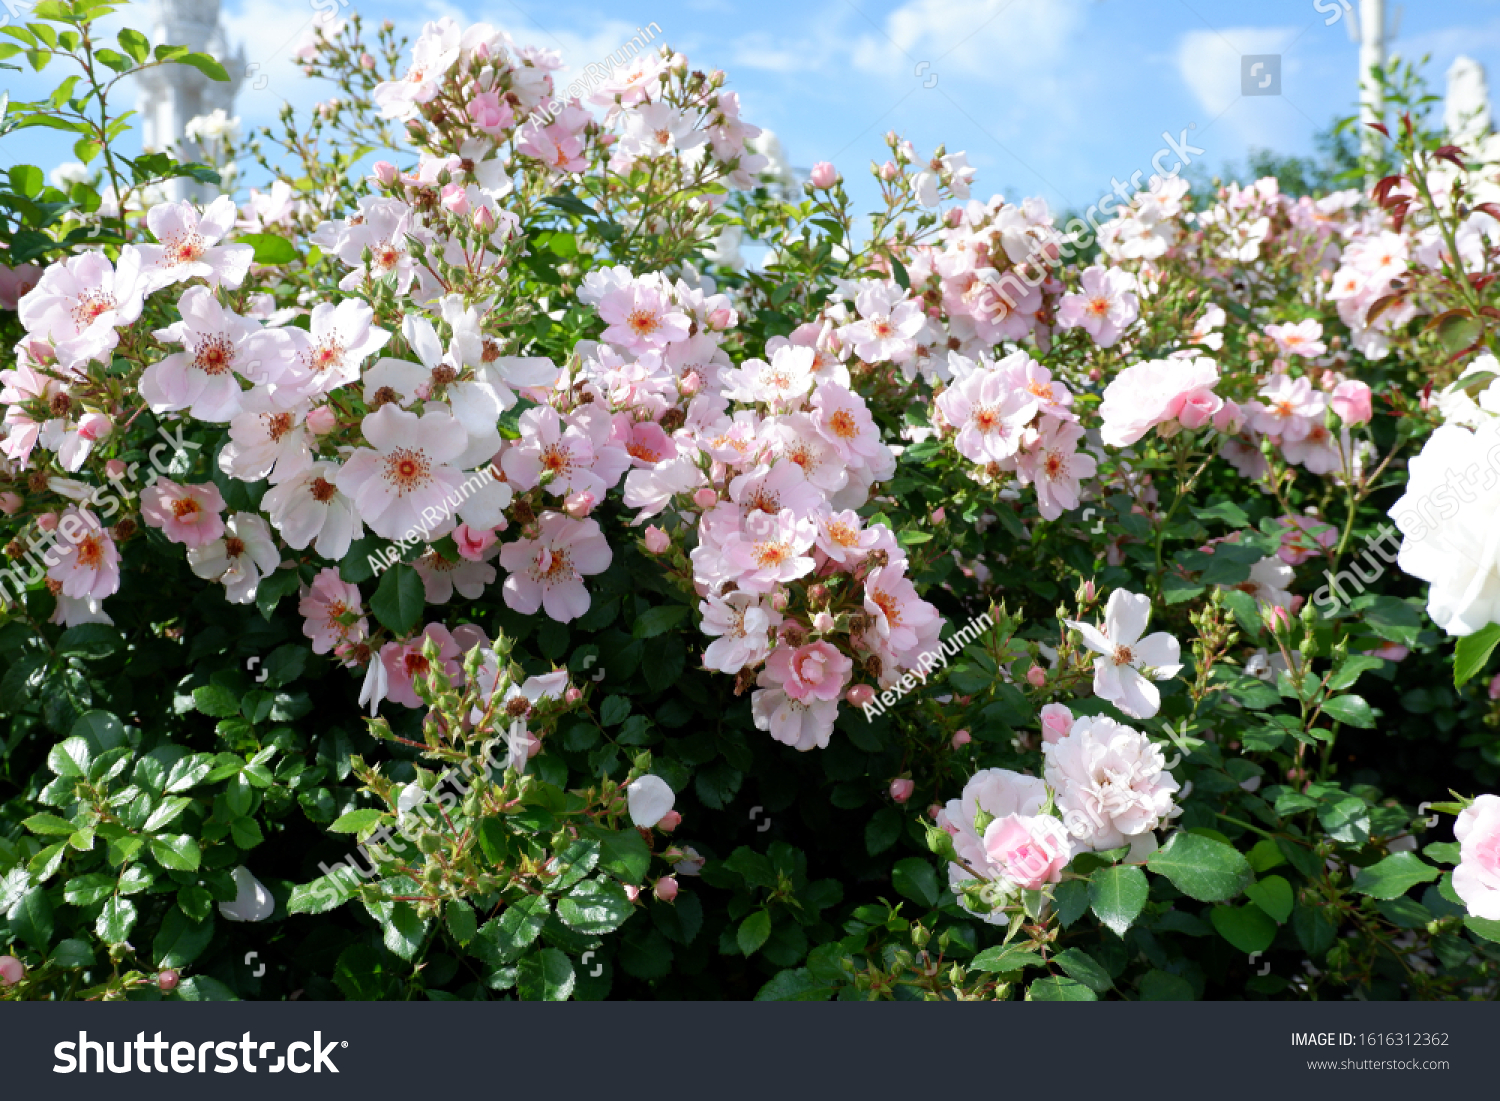 Rose flowers of rose hip on rose hip bush closeup view